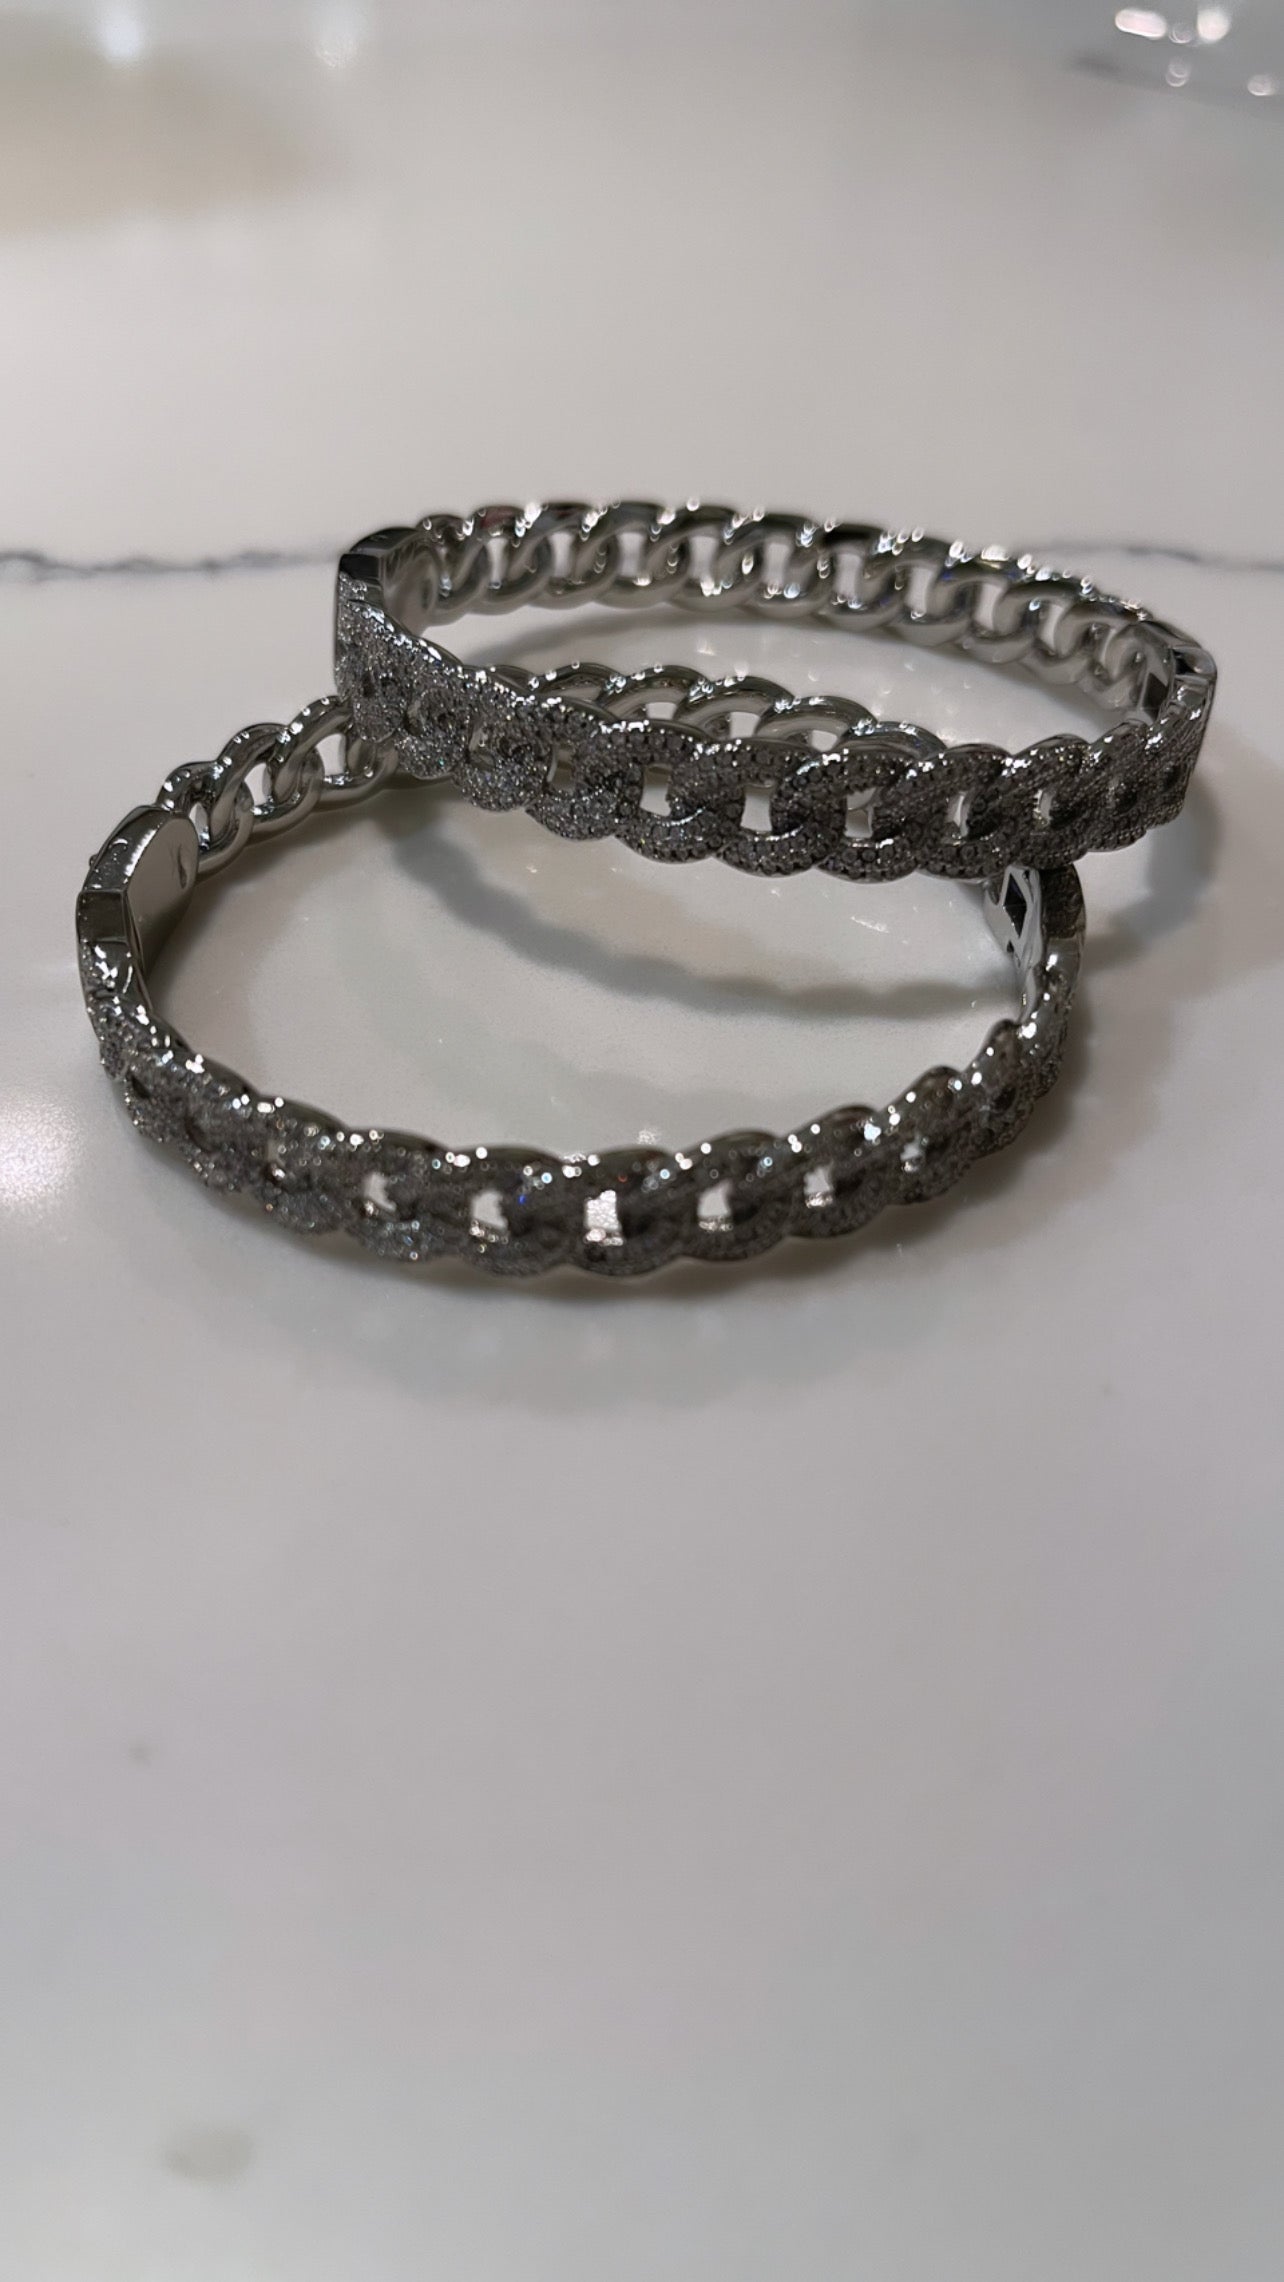 Stone chain bracelets